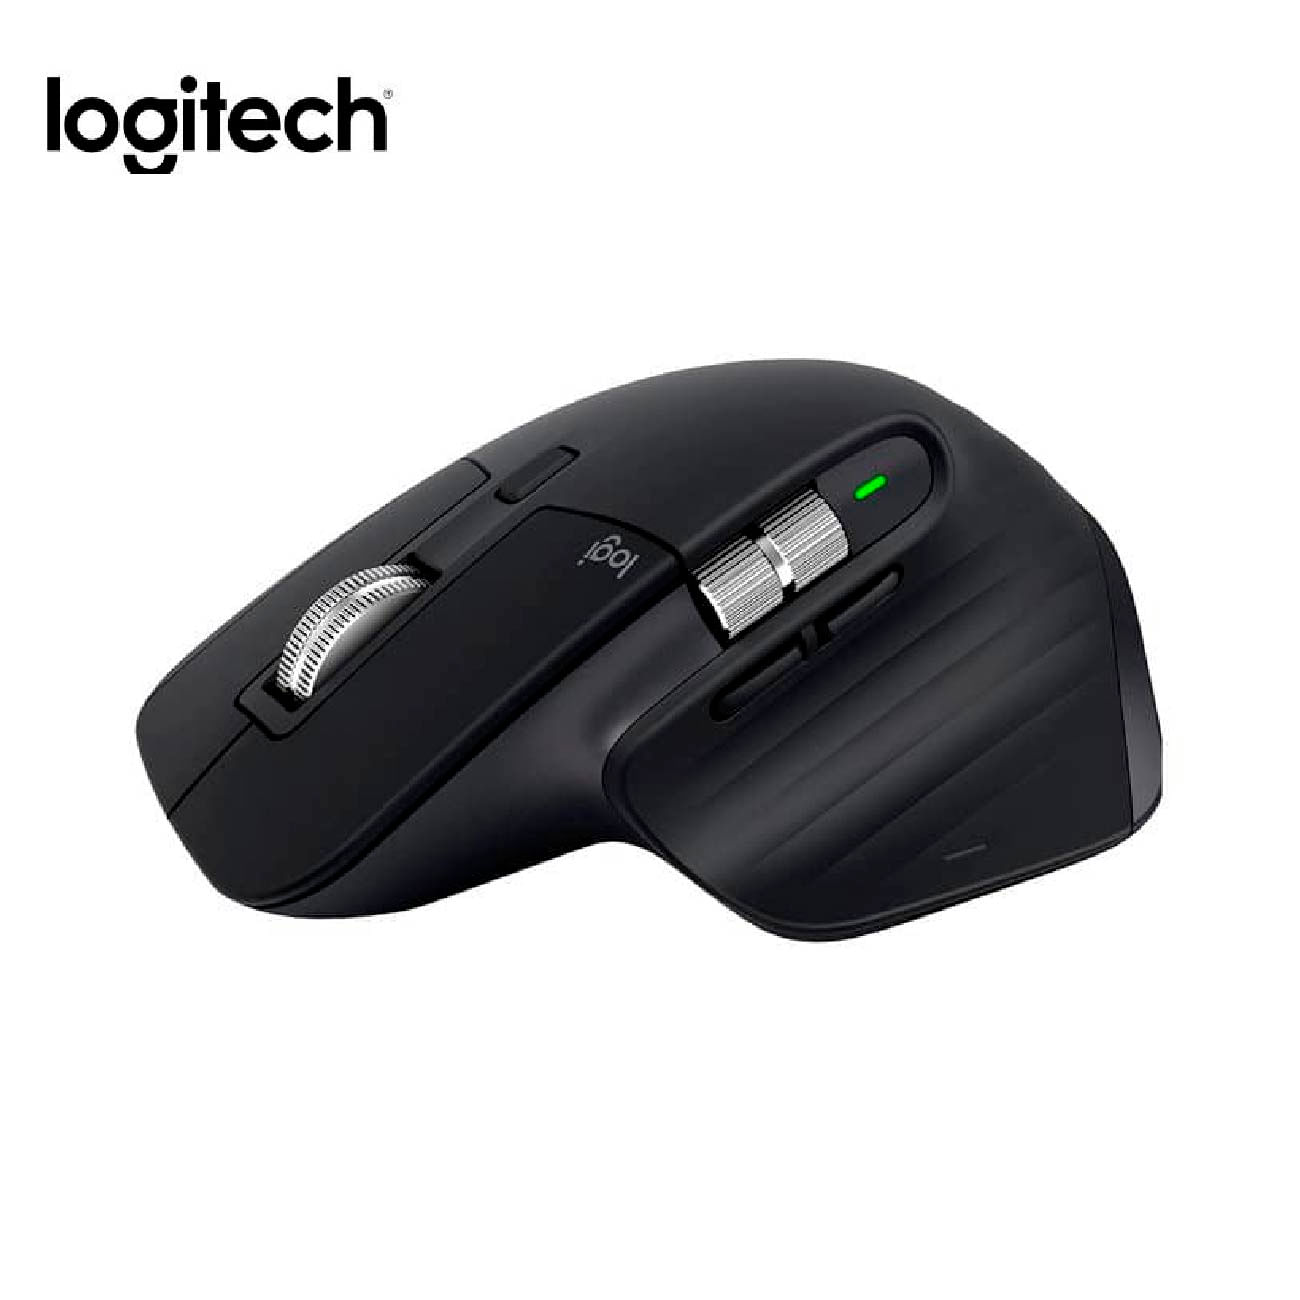 Mouse Logitech MX Master 3 Wireless Black/Silver